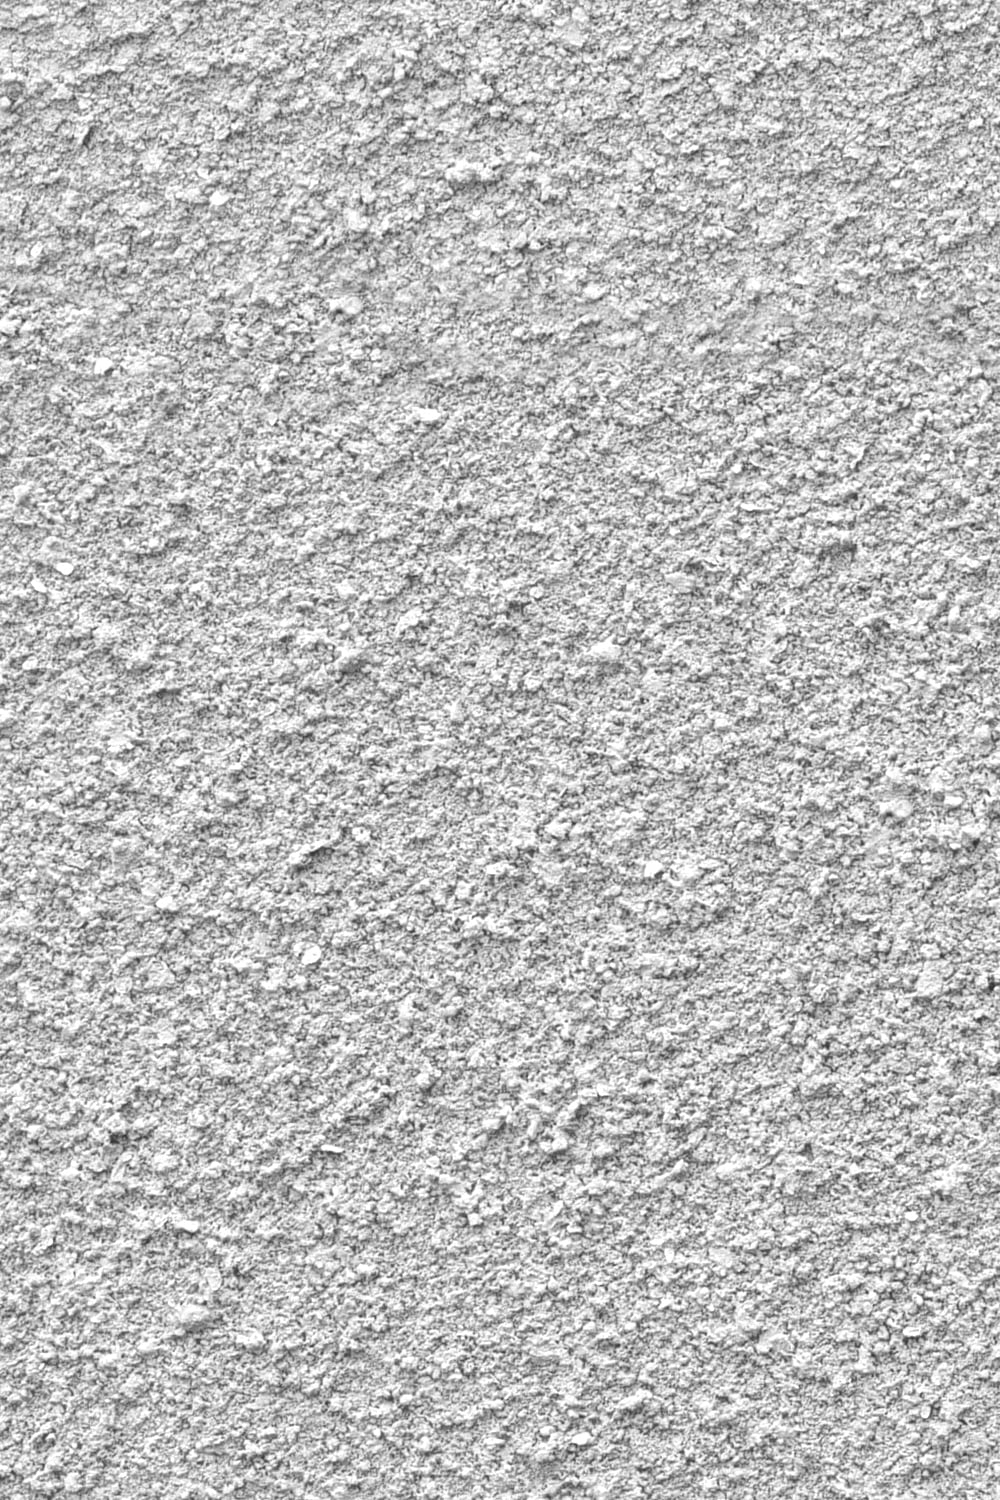 White mortar wall